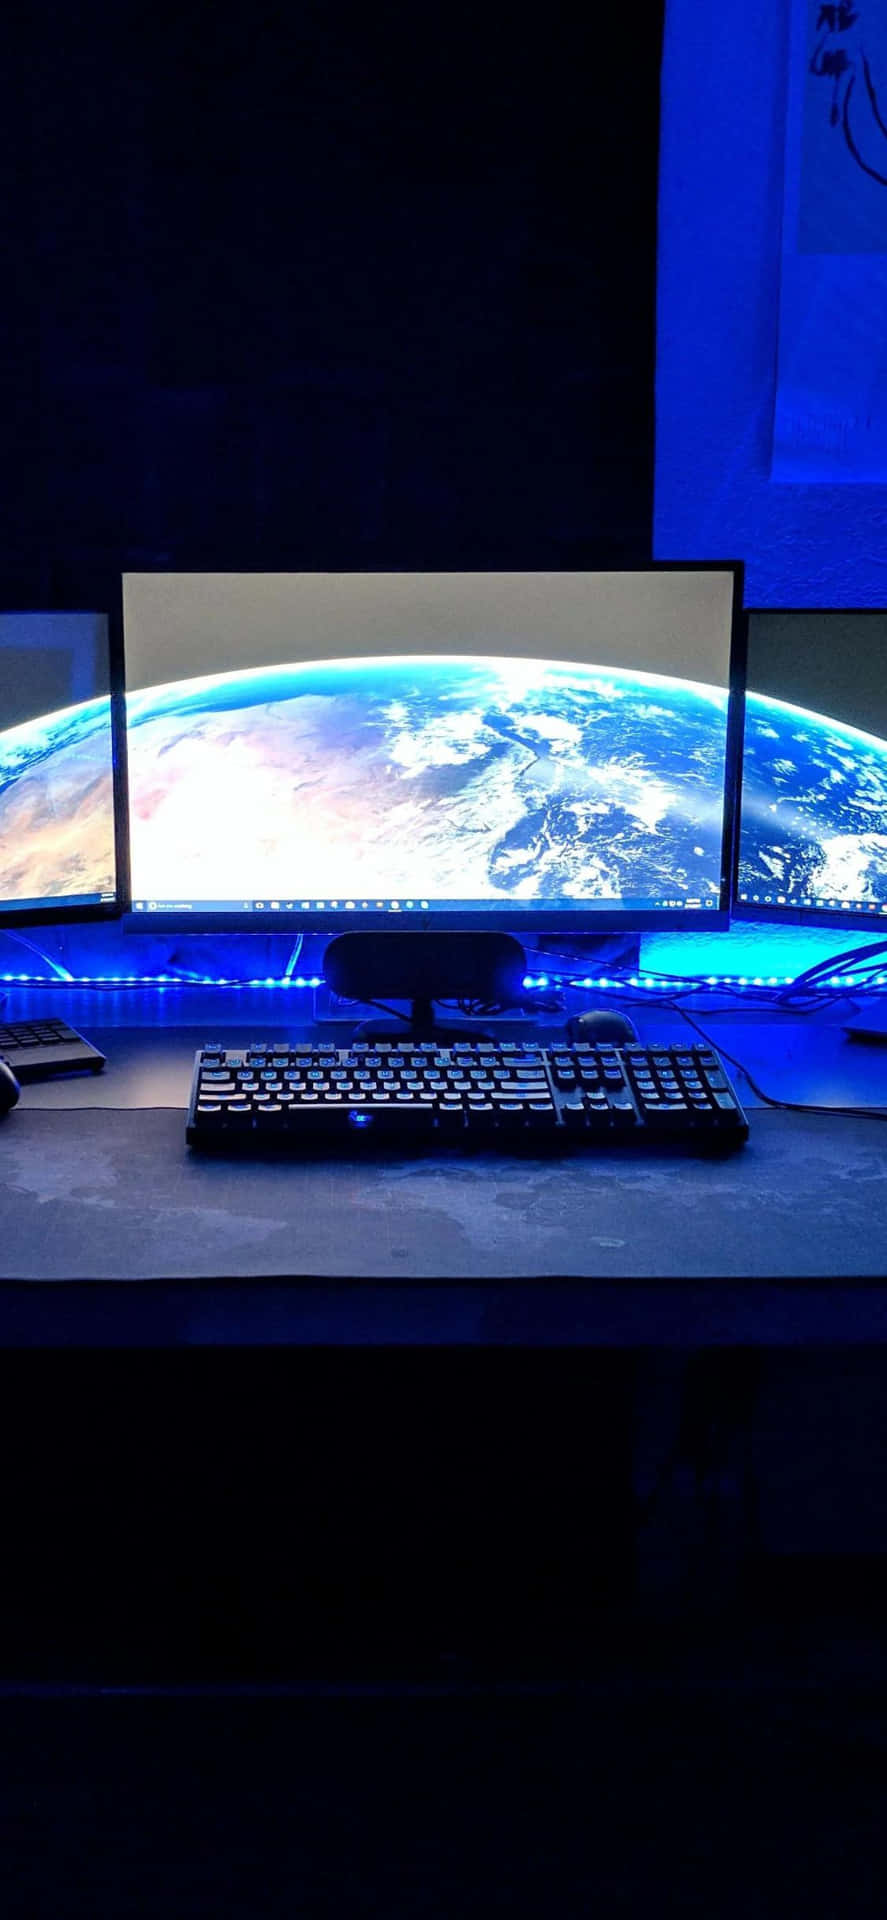 A Desk With Three Monitors